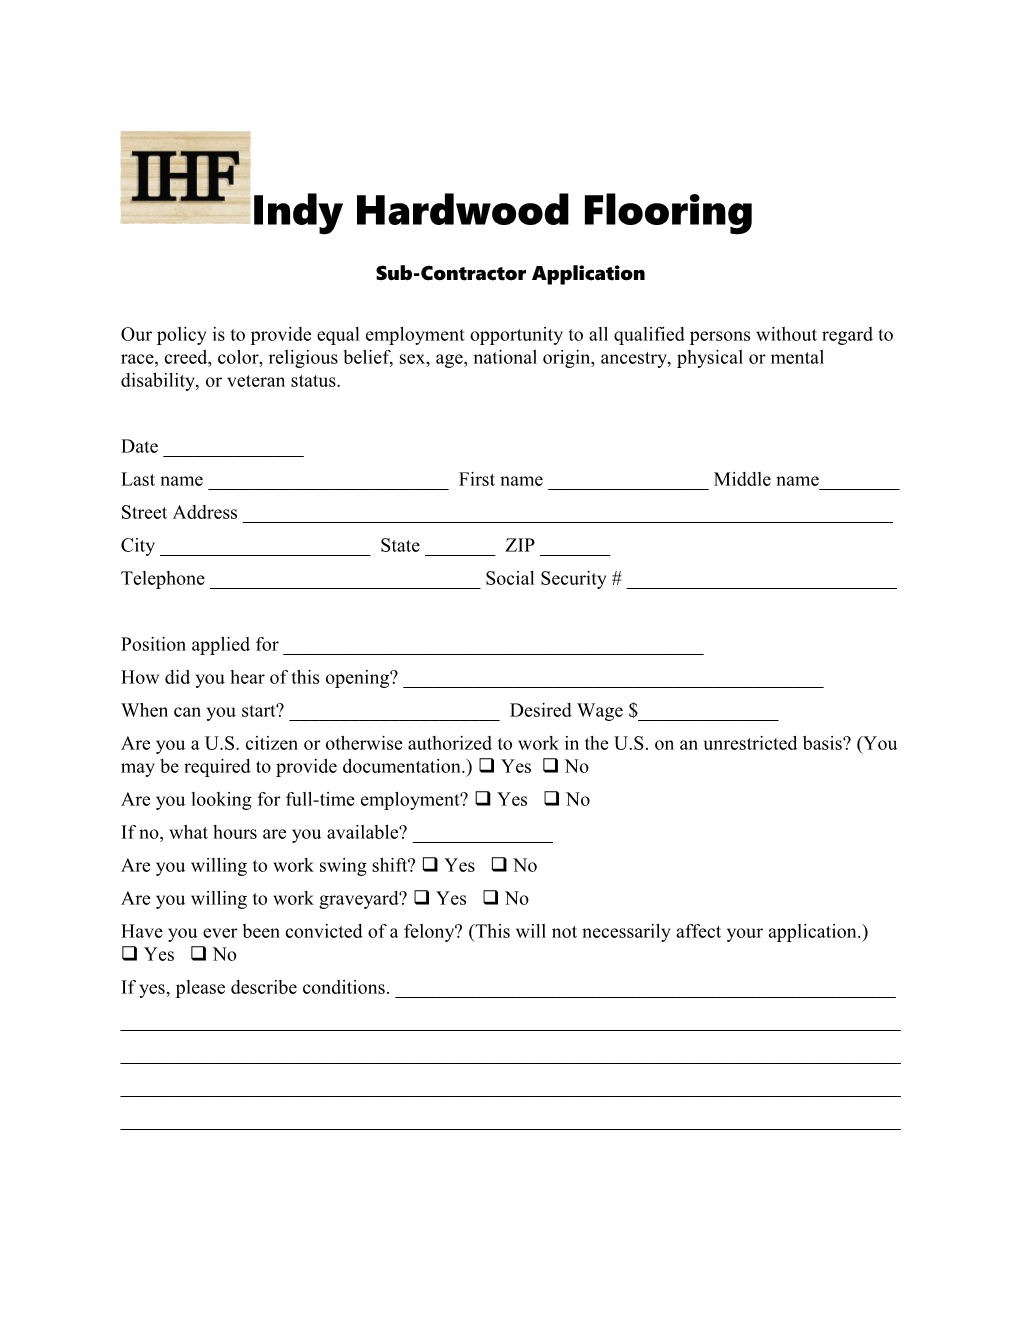 Indy Hardwood Flooring